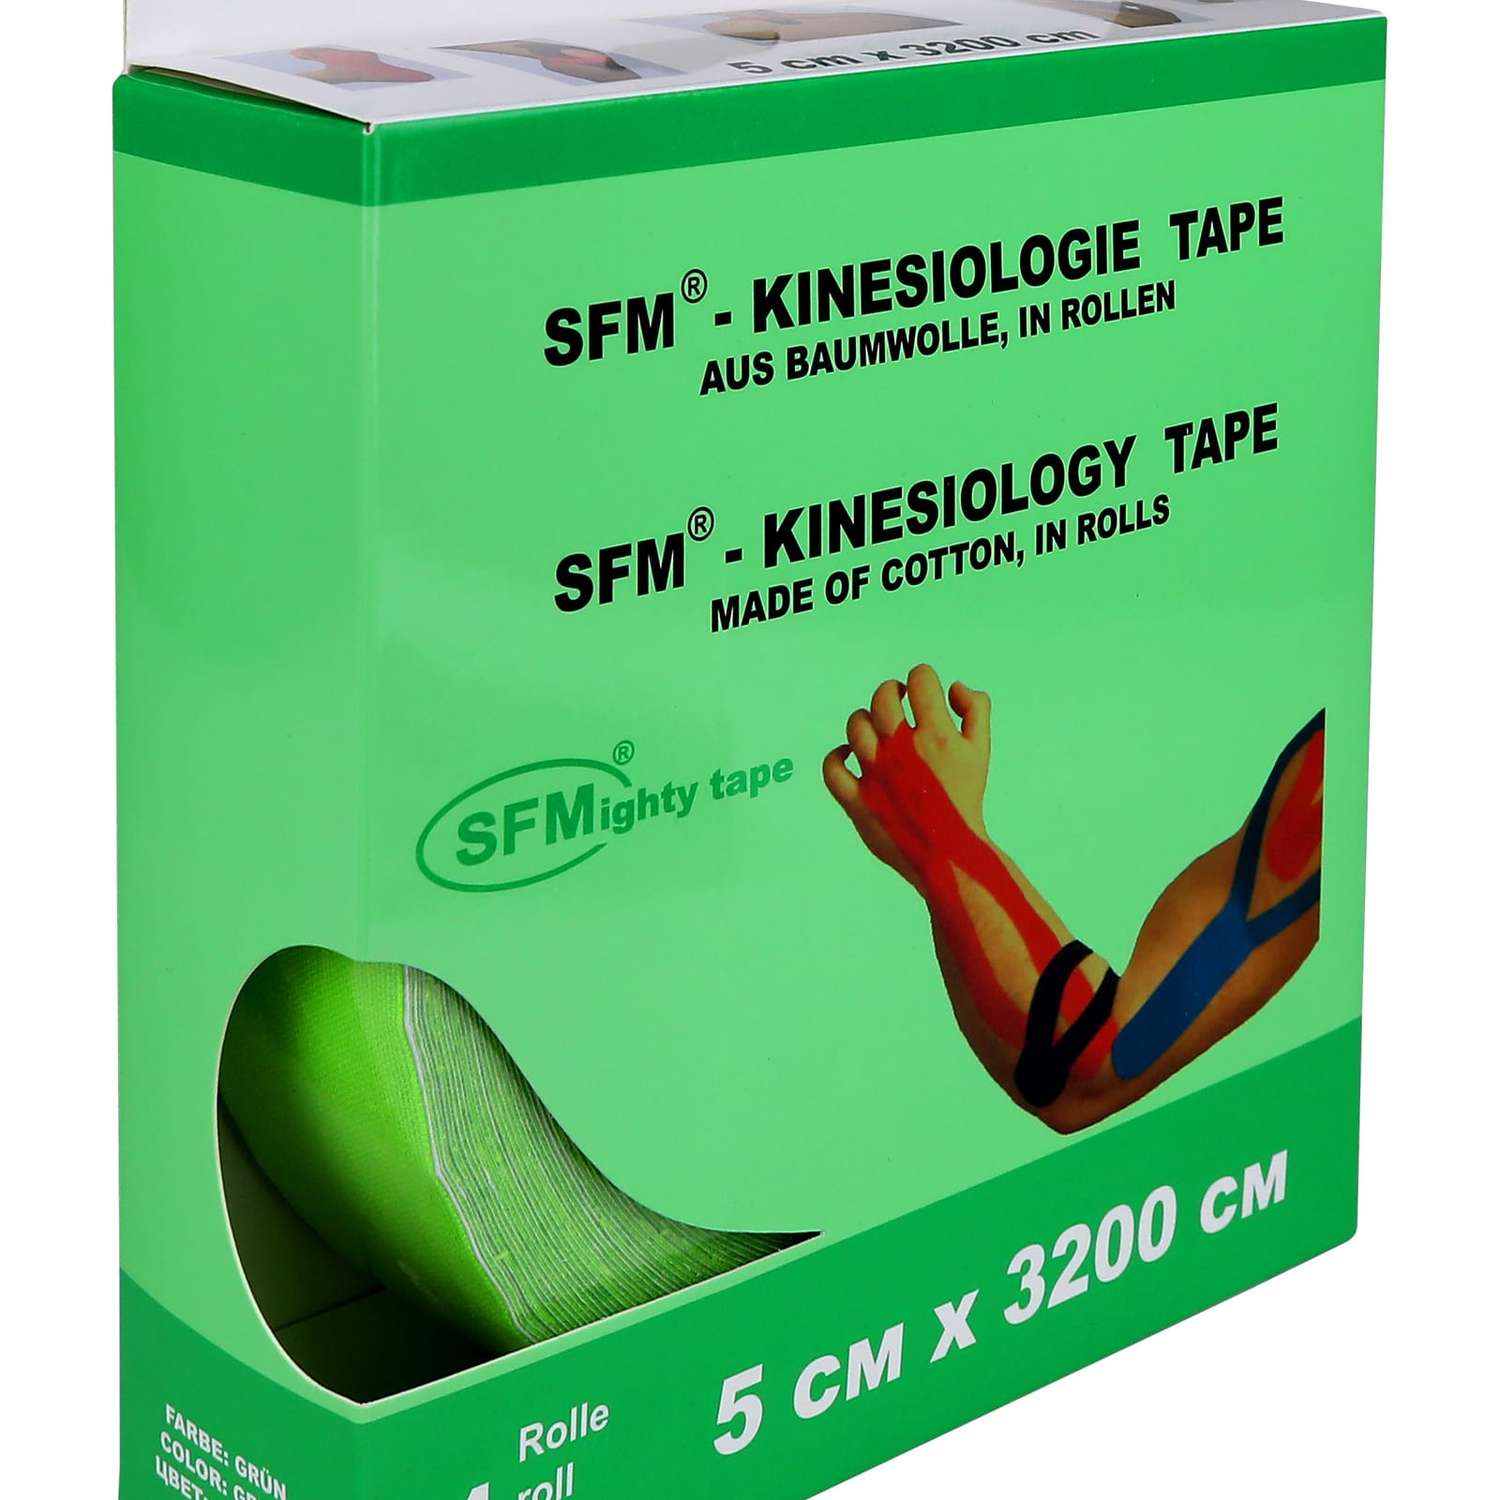 Кинезиотейп SFM Hospital Products Plaster на хлопковой основе 5х3200 см зеленого цвета в диспенсере с логотипом - фото 1